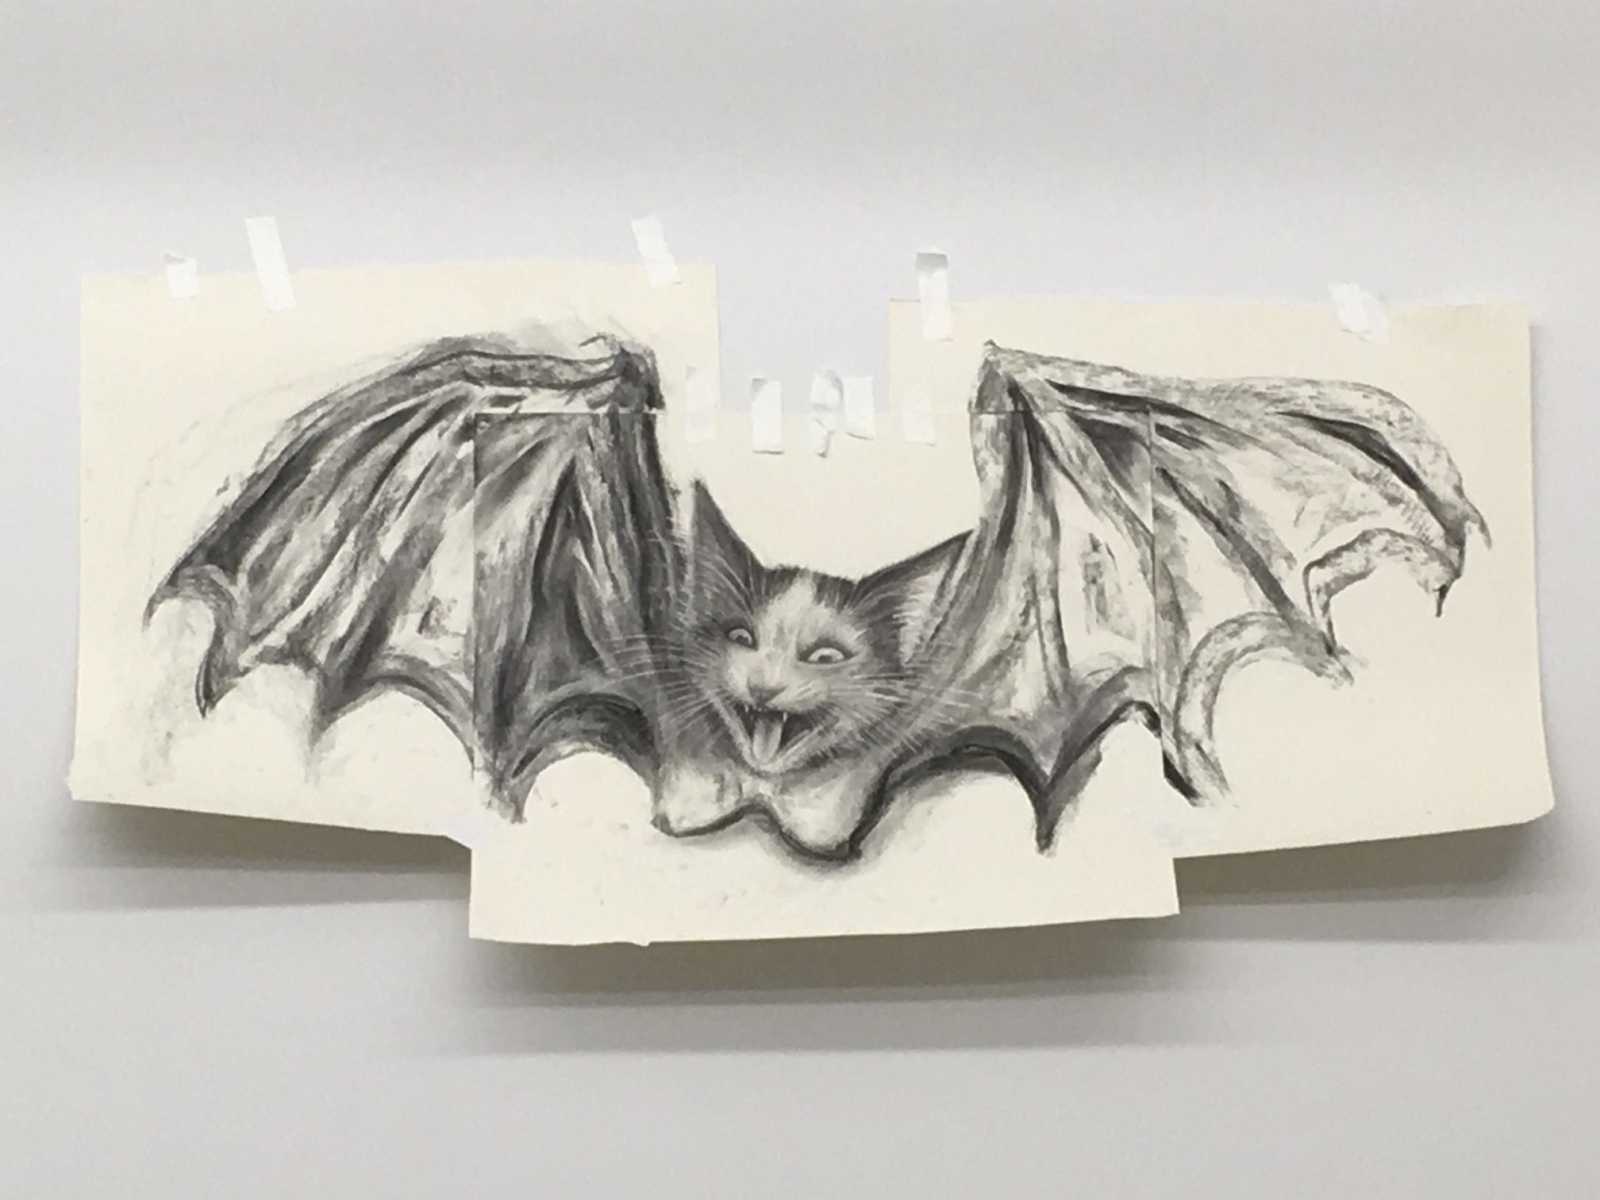 Aurel Schmidt
Cat Bat, 2017
charcoal on paper
23 3/4 x 43 in.
60.3 x 109.2 cm